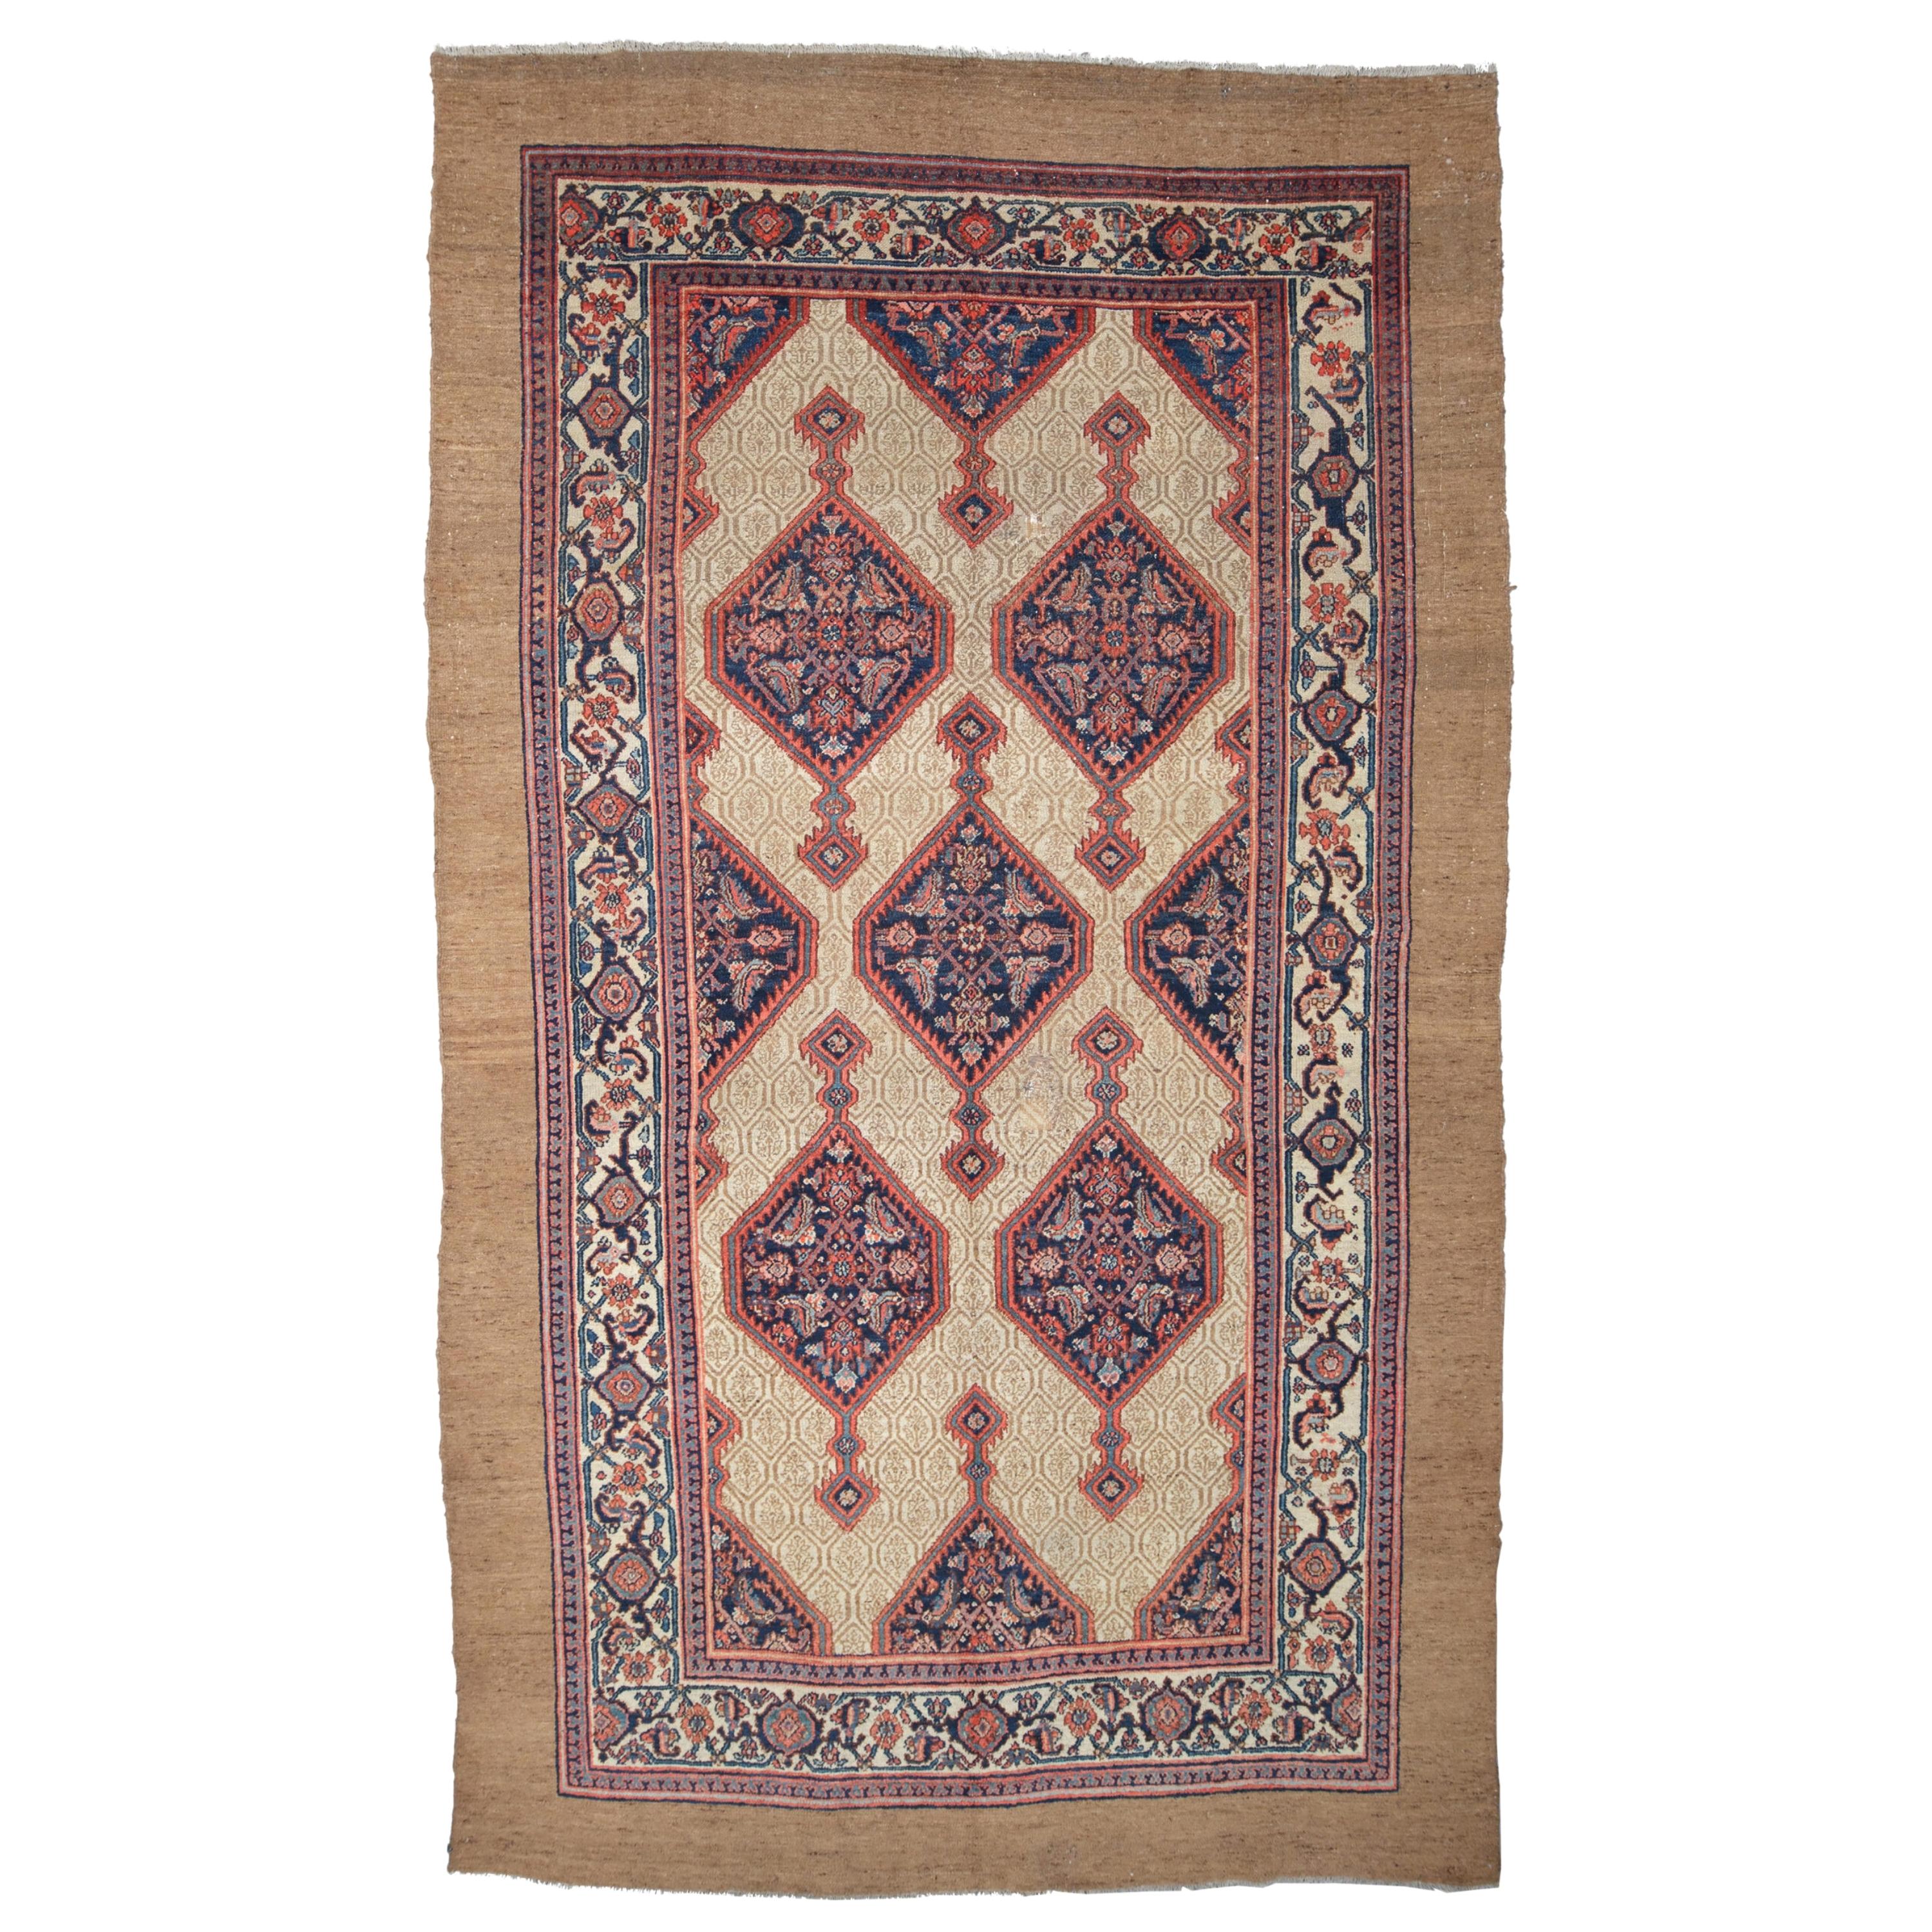 Tapis Sarab du 19ème siècle, tapis antique, tapis vintage